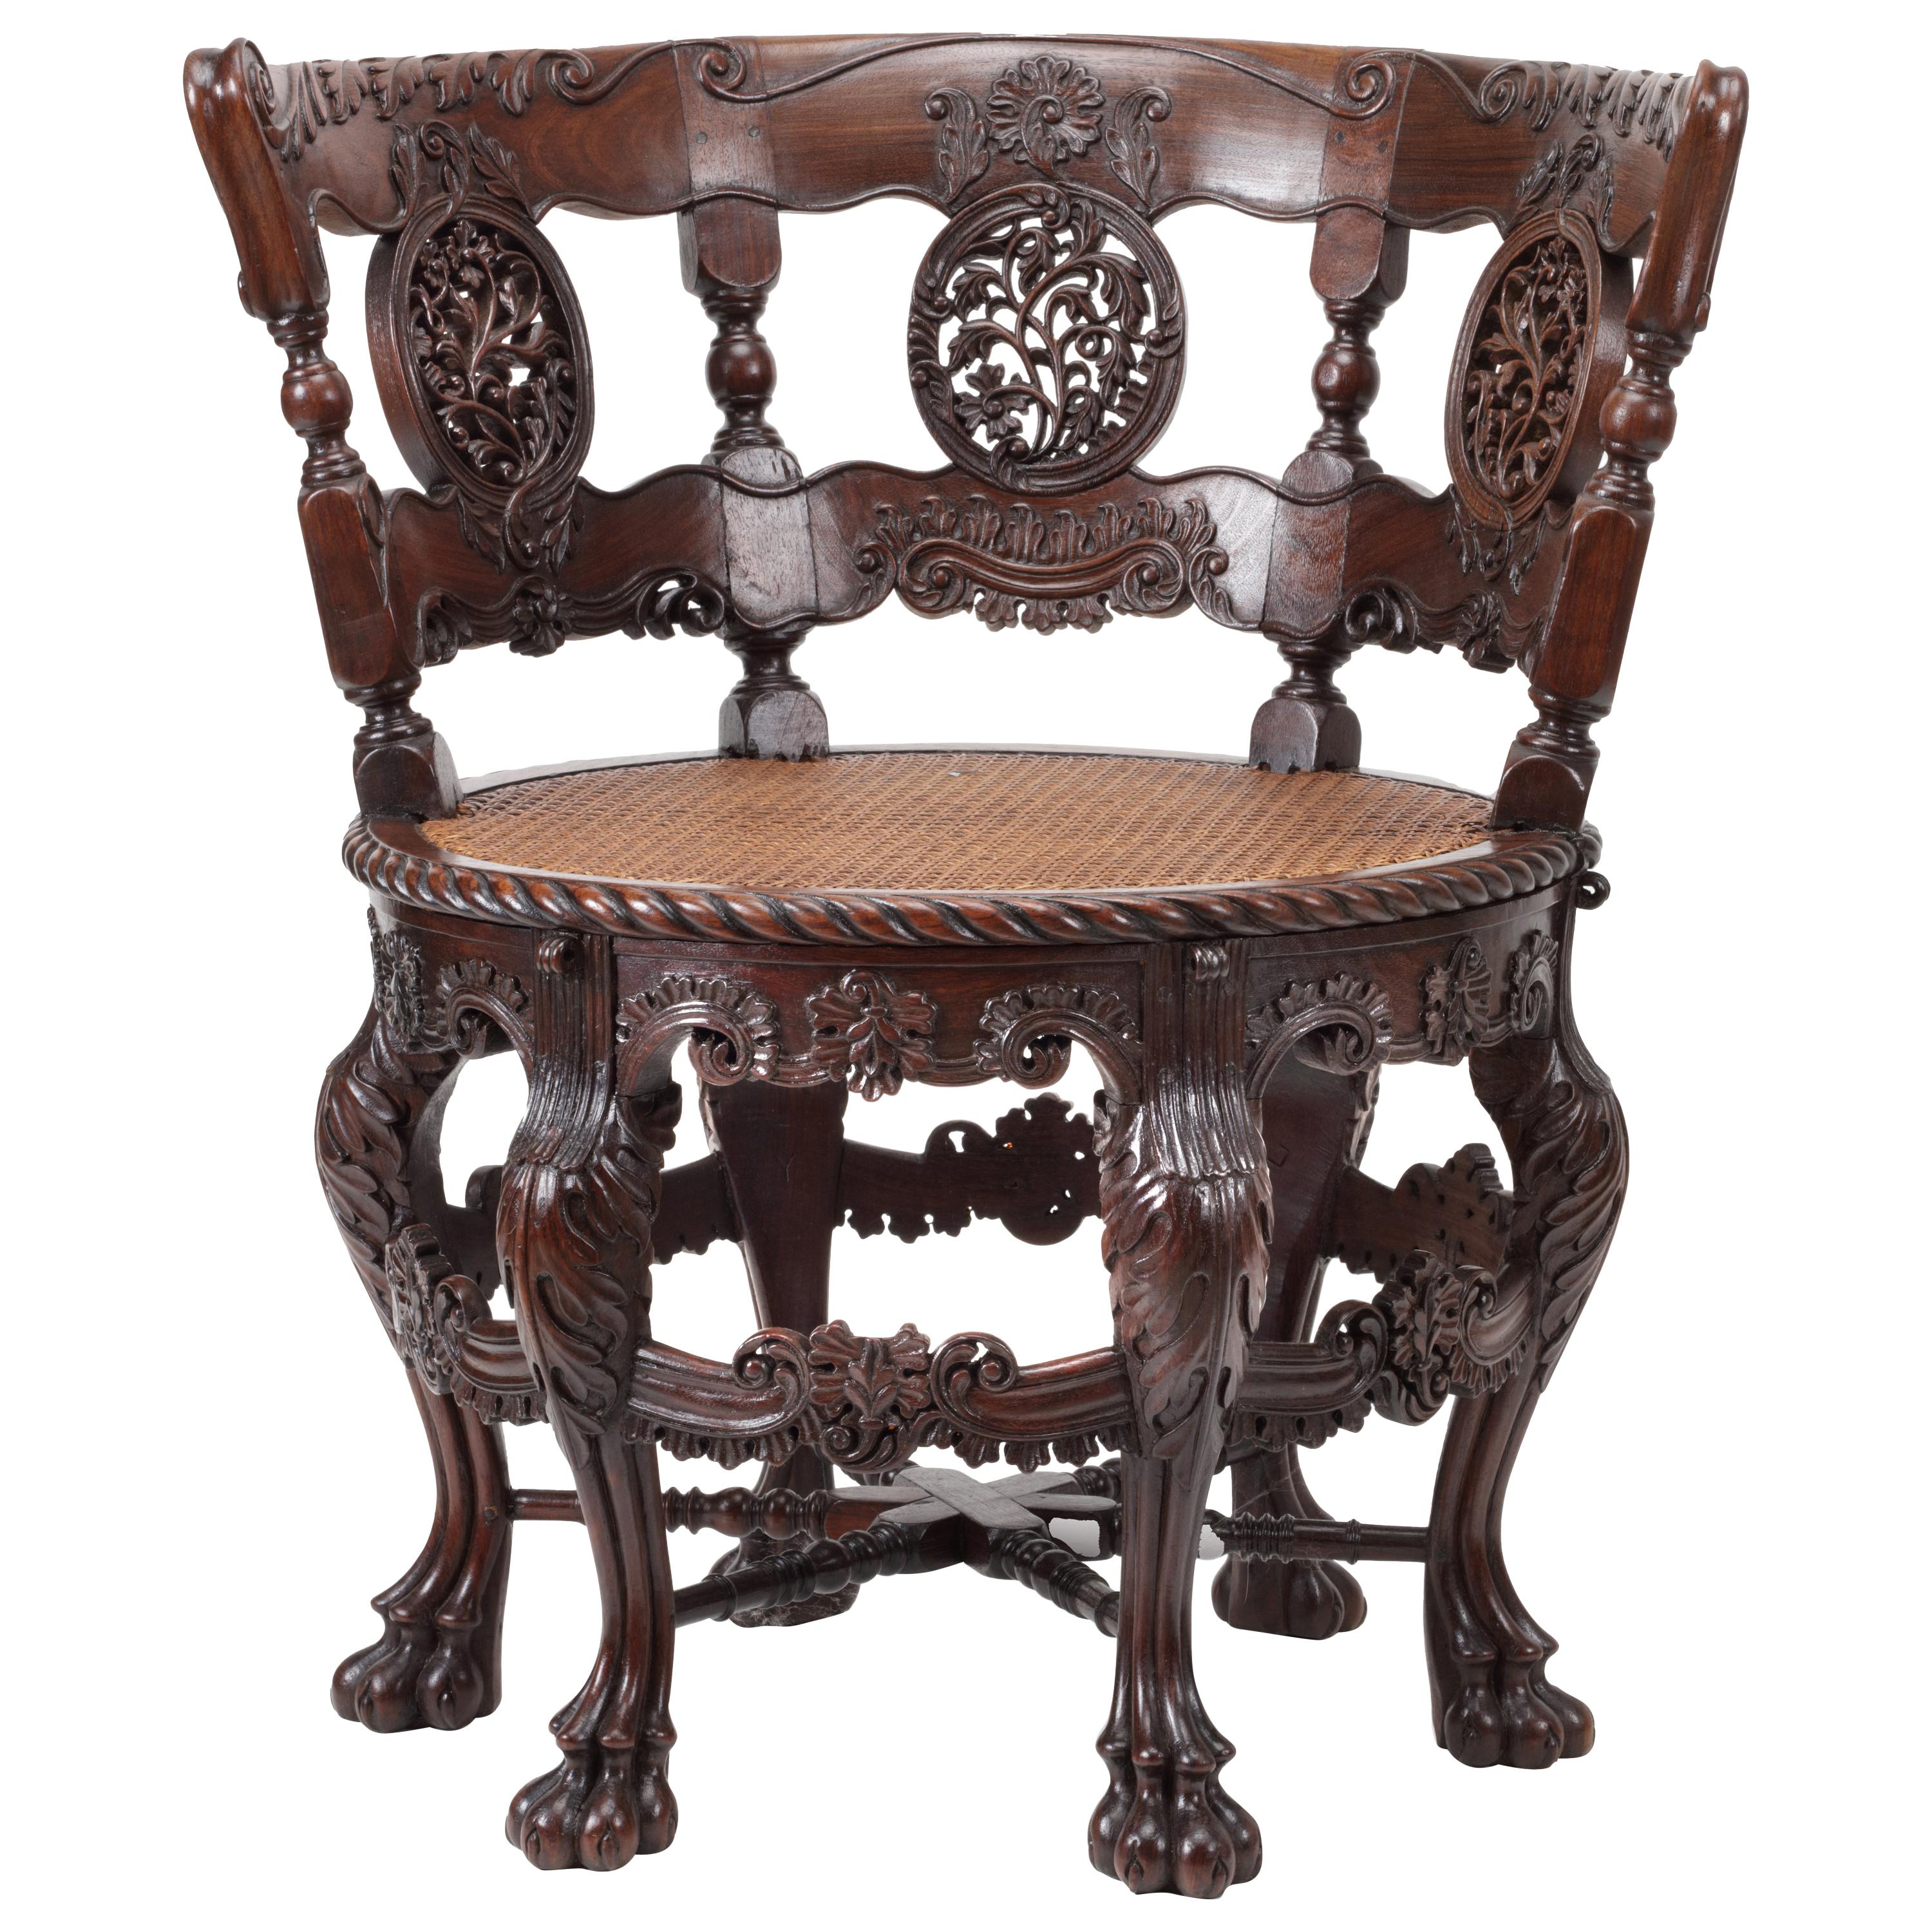 Sri Lankan Mãrã or East Indian Walnut ‘Burgomaster’ Chair